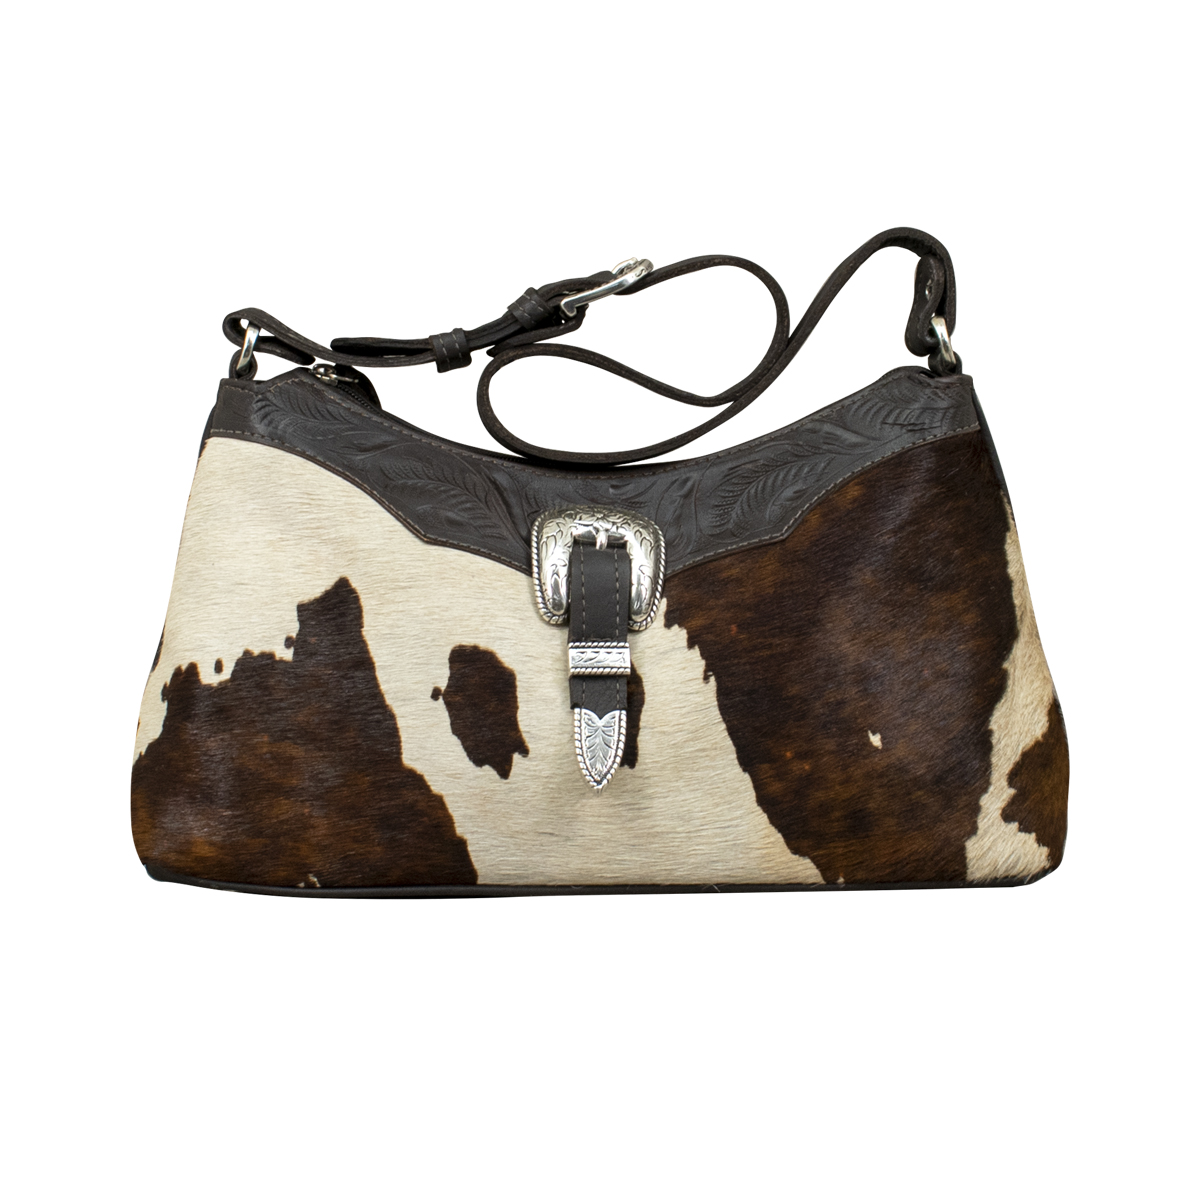 Picture of American West 4150285 15 in. Cow Town Zip-Top Shoulder Bag, Brown